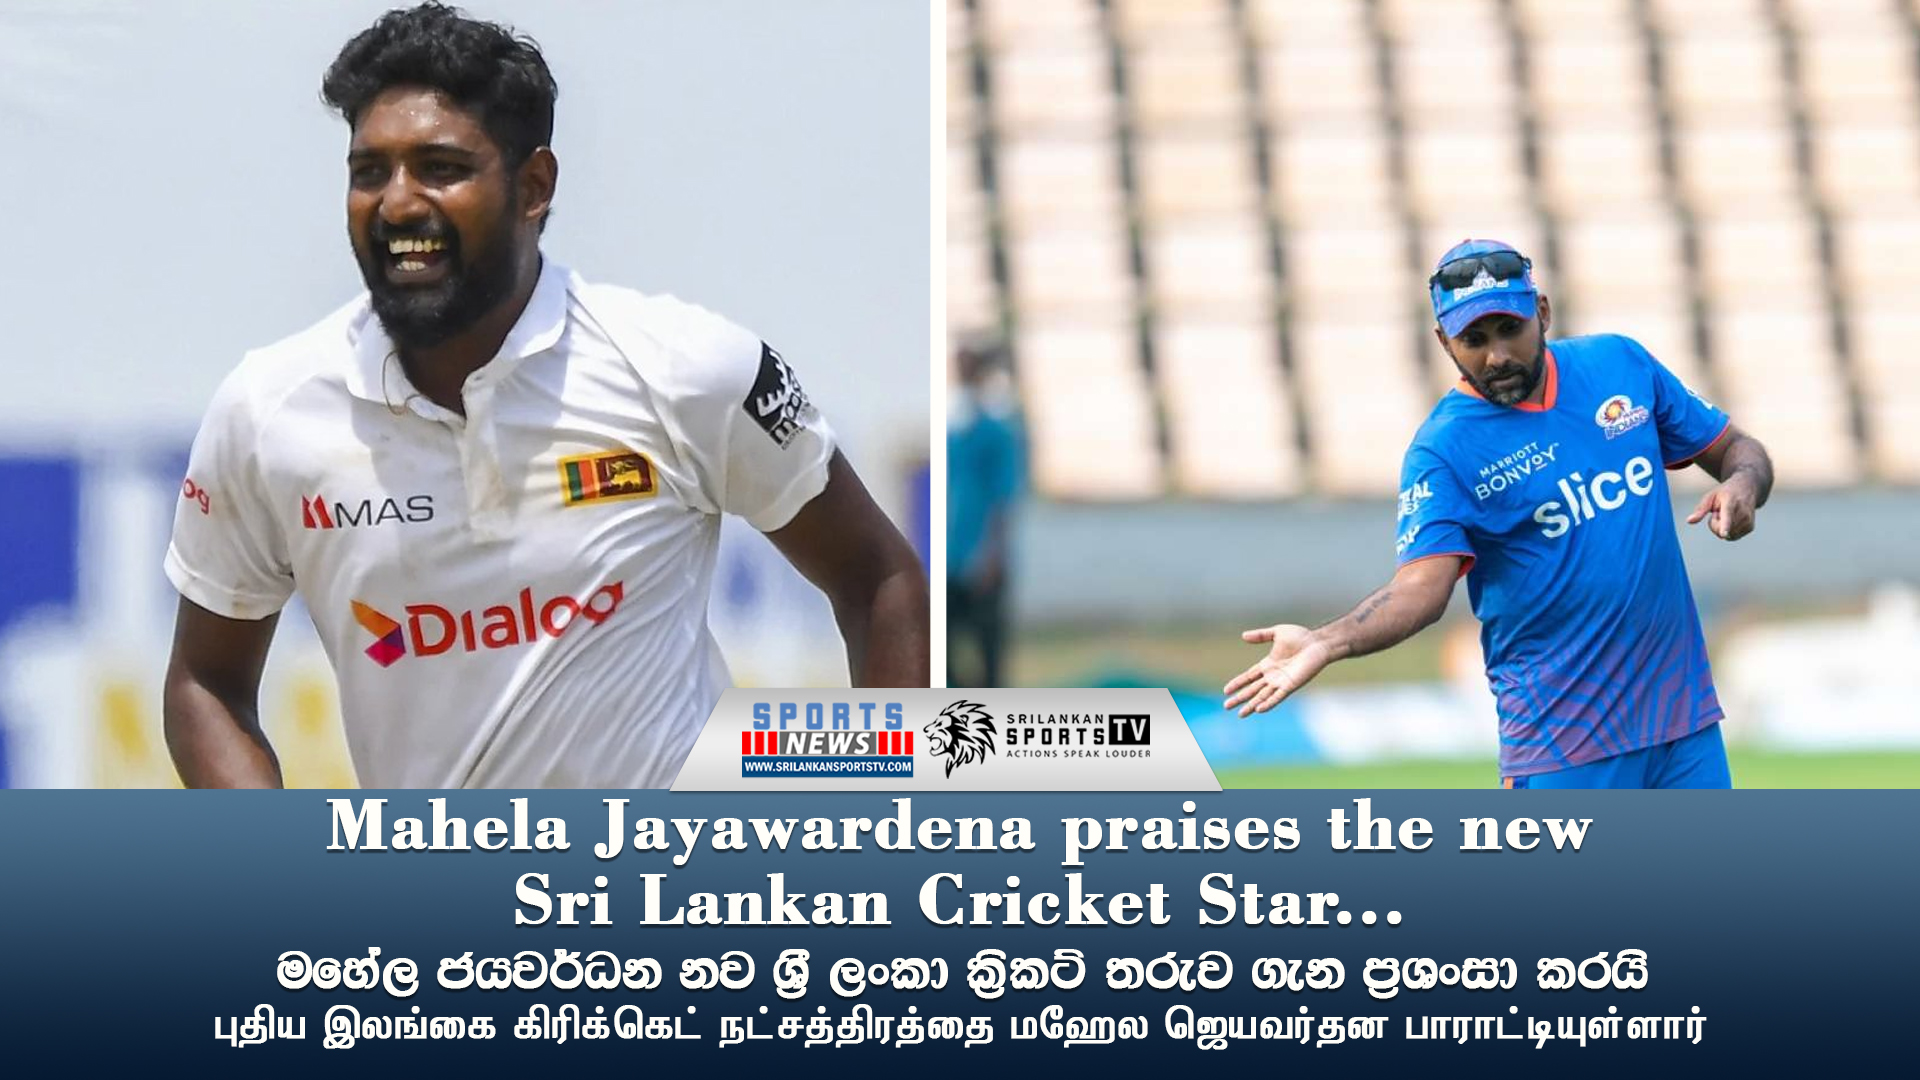 Mahela Jayawardena praises the new Sri Lankan Cricket Star…